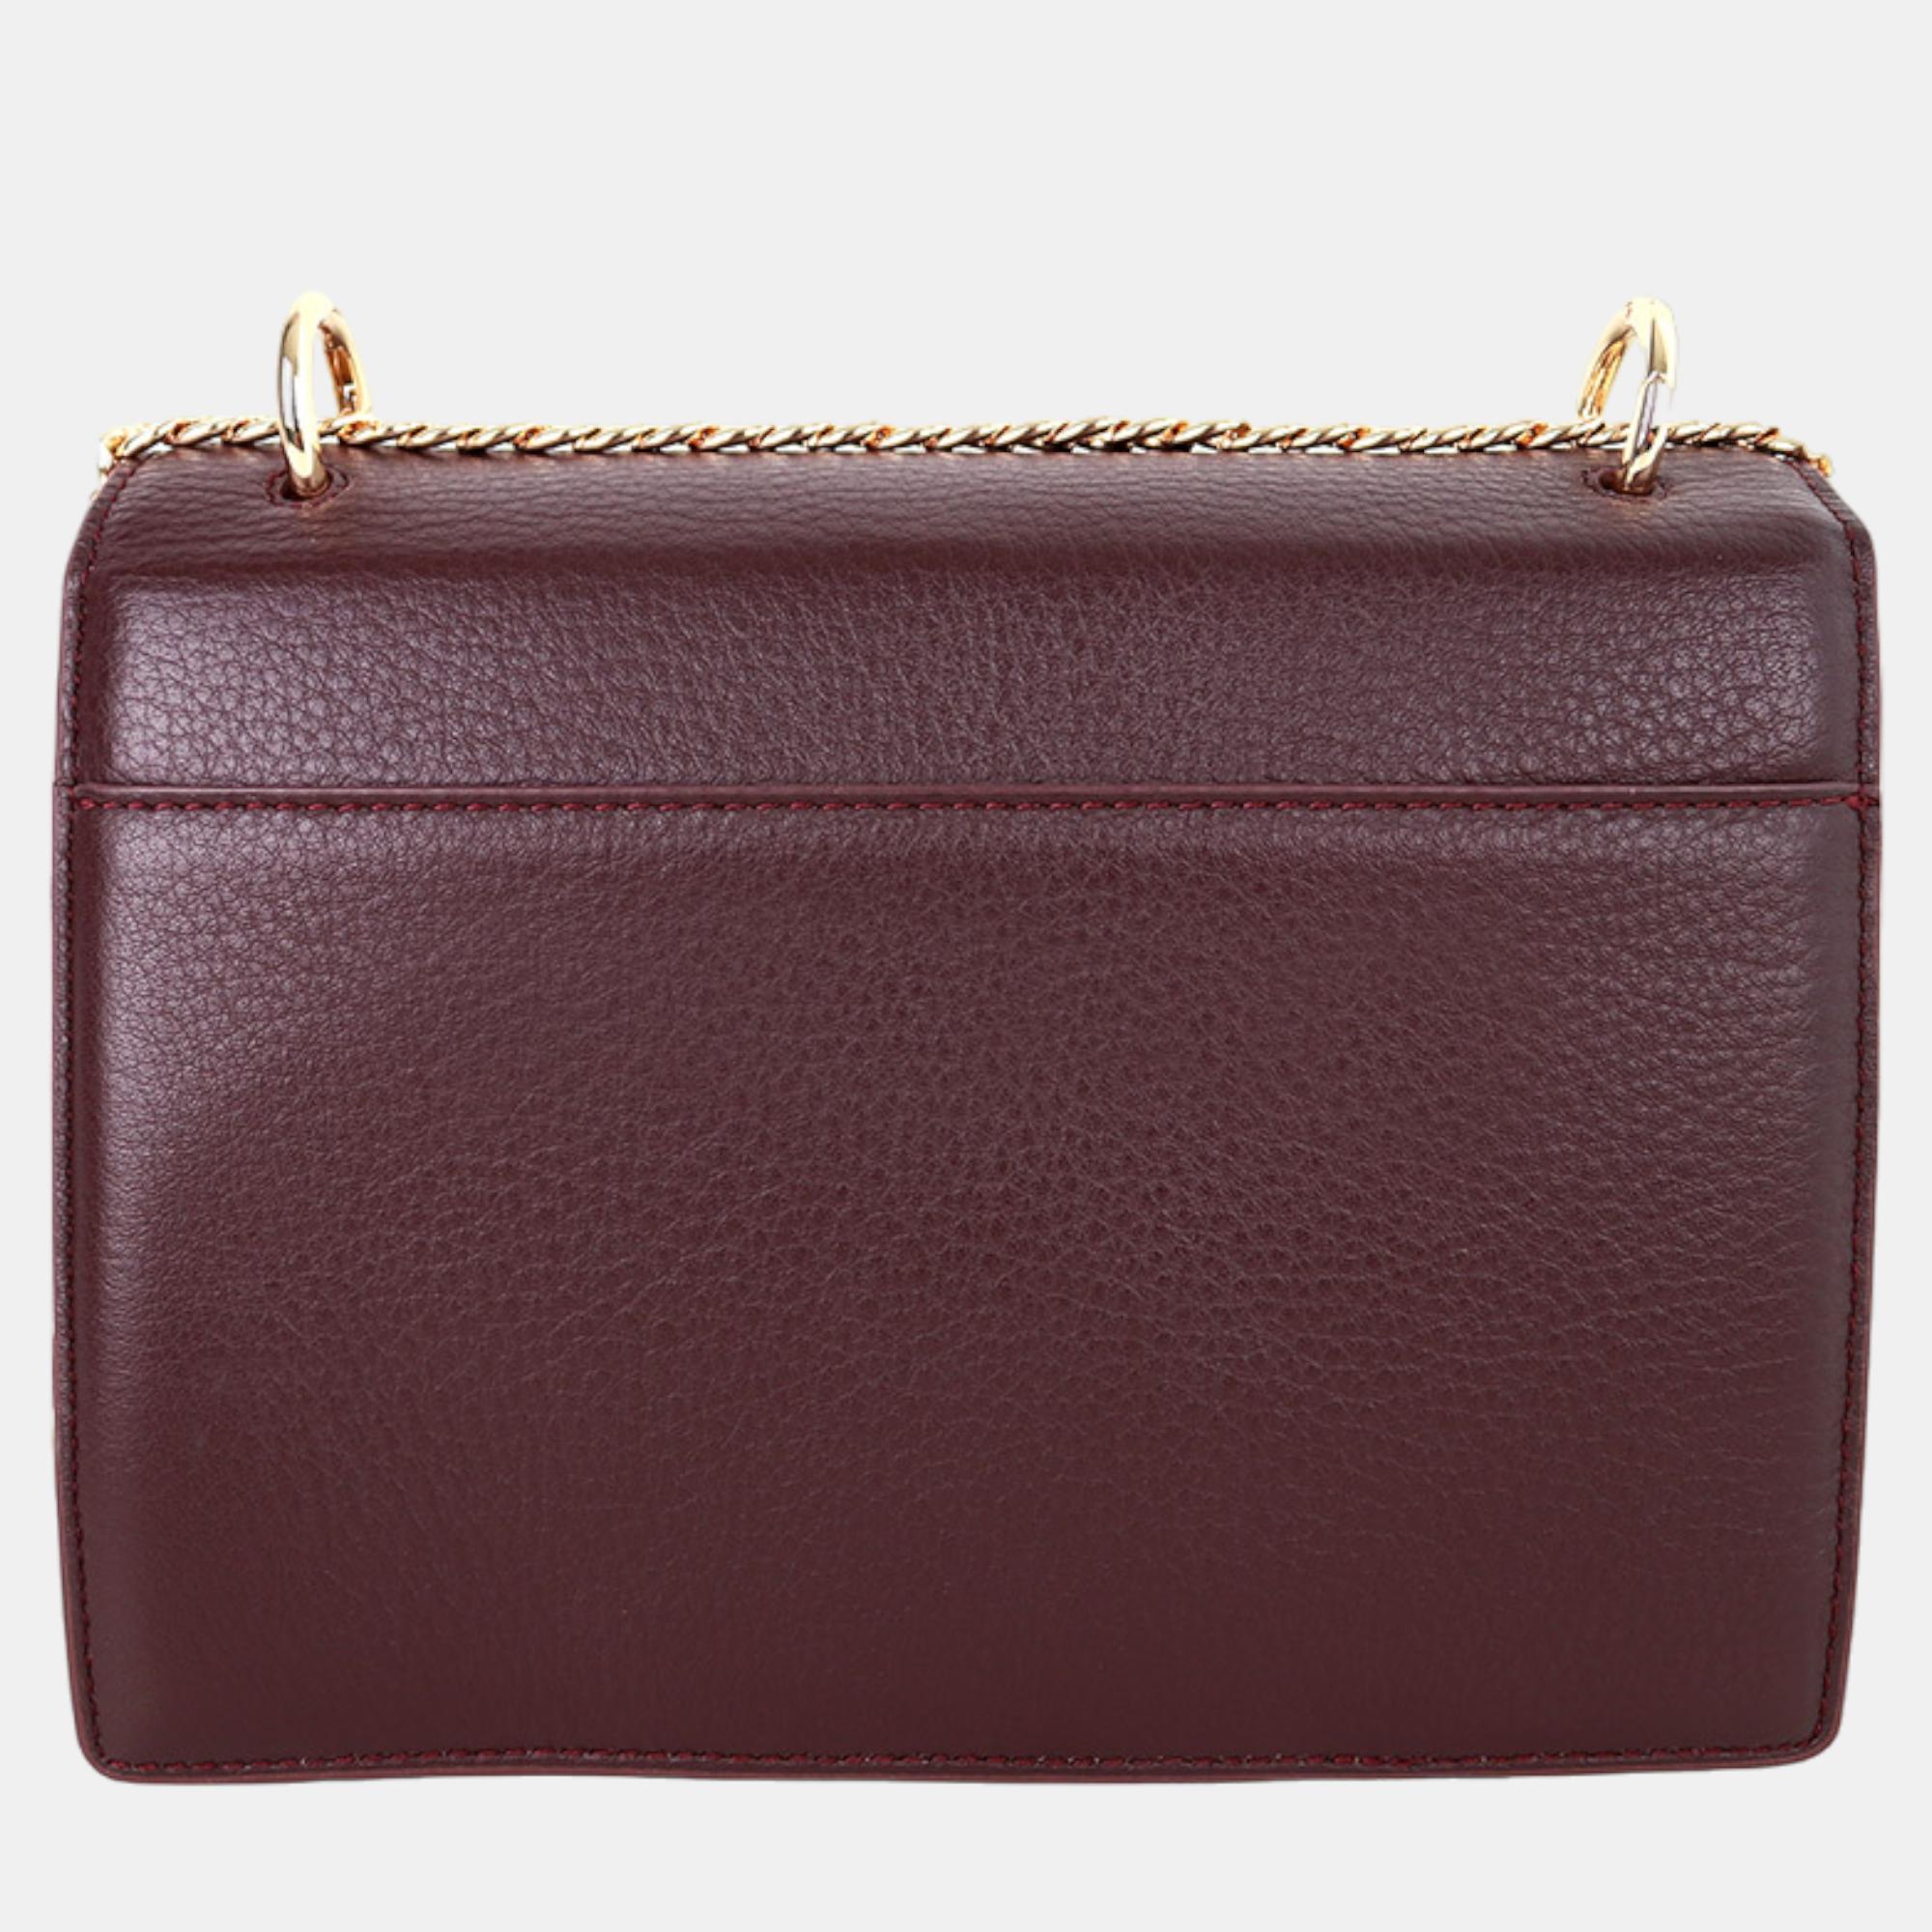 Charriol Chocolate Leather Forever Handbag